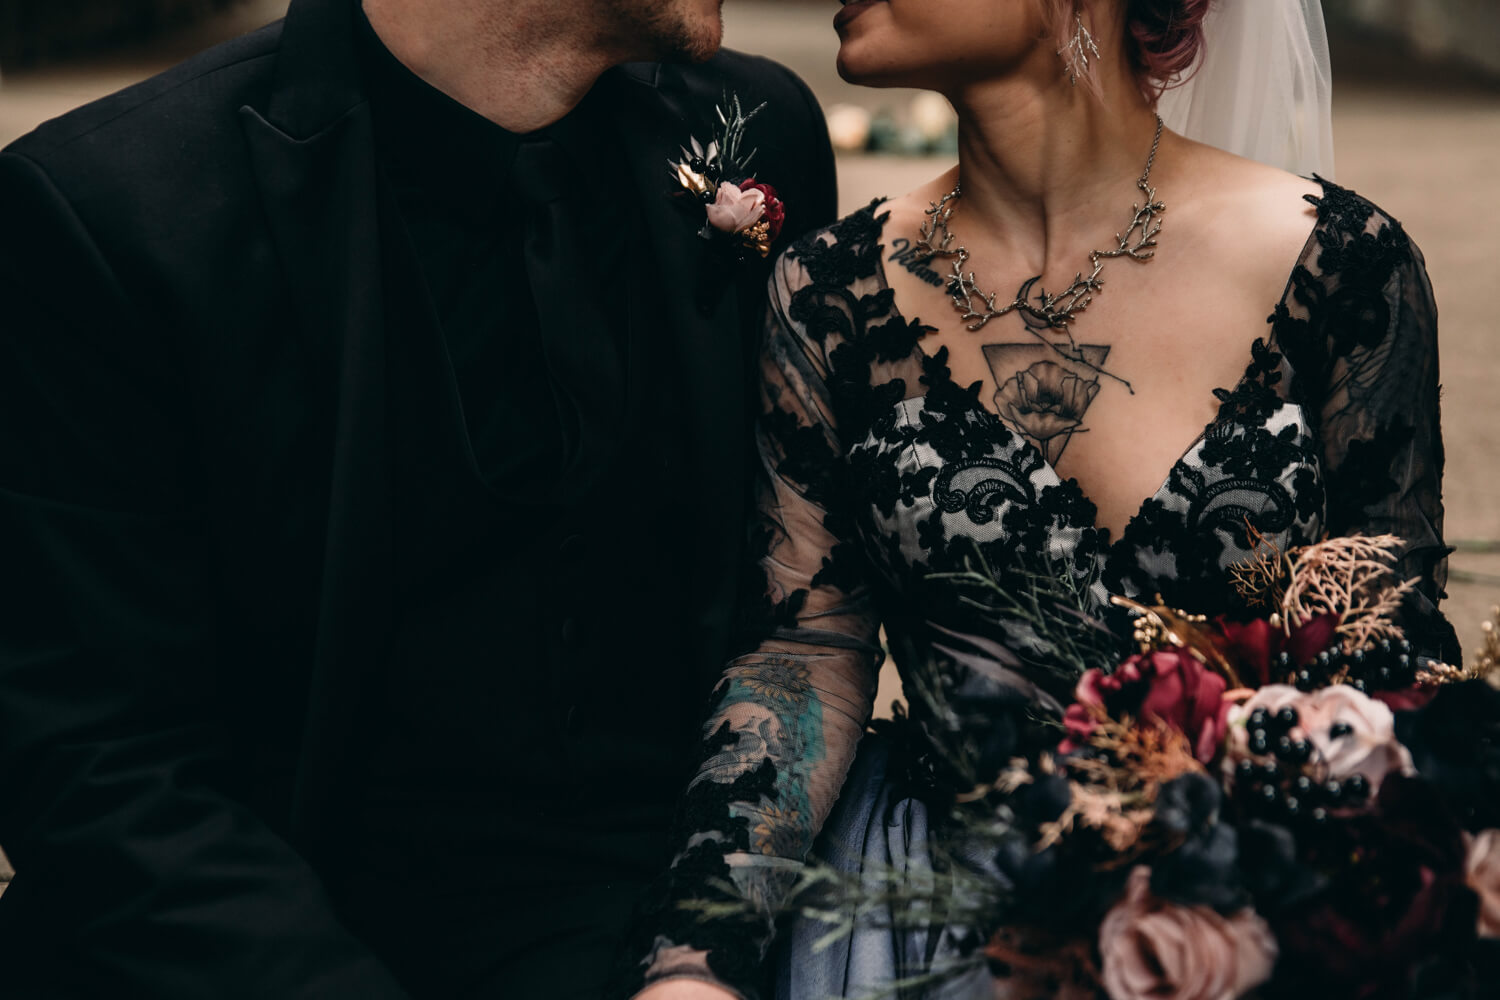 Alternative couple get married in a long black wedding dress in Ohio.